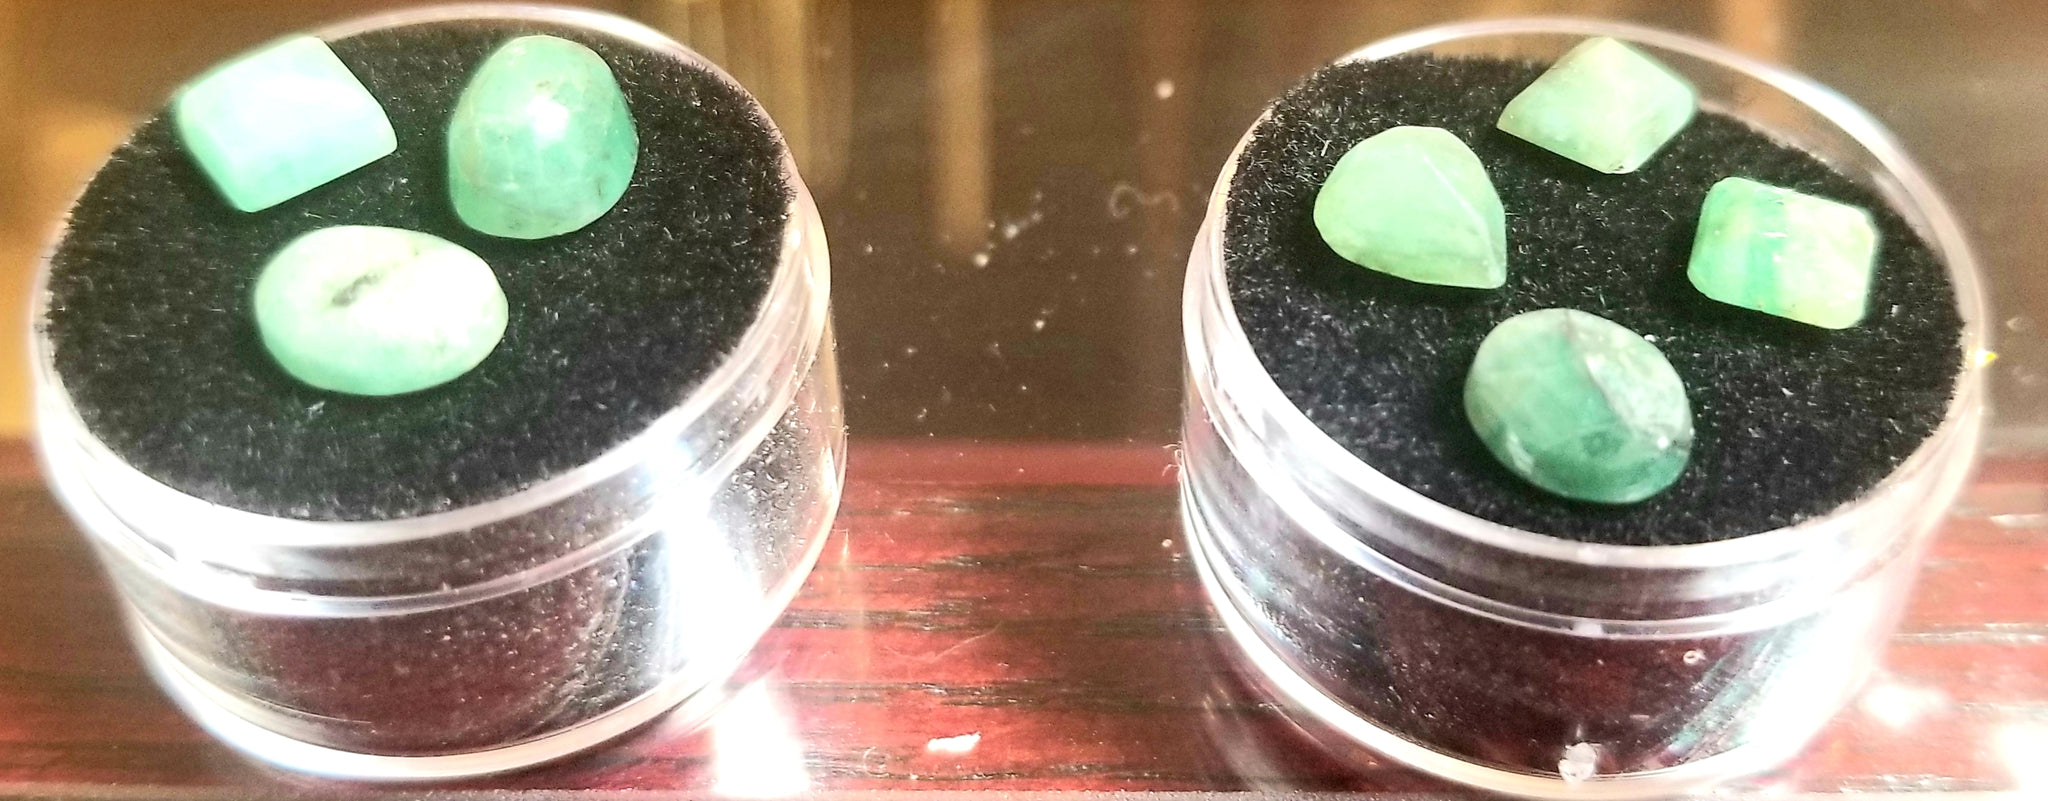 Emerald microbeads